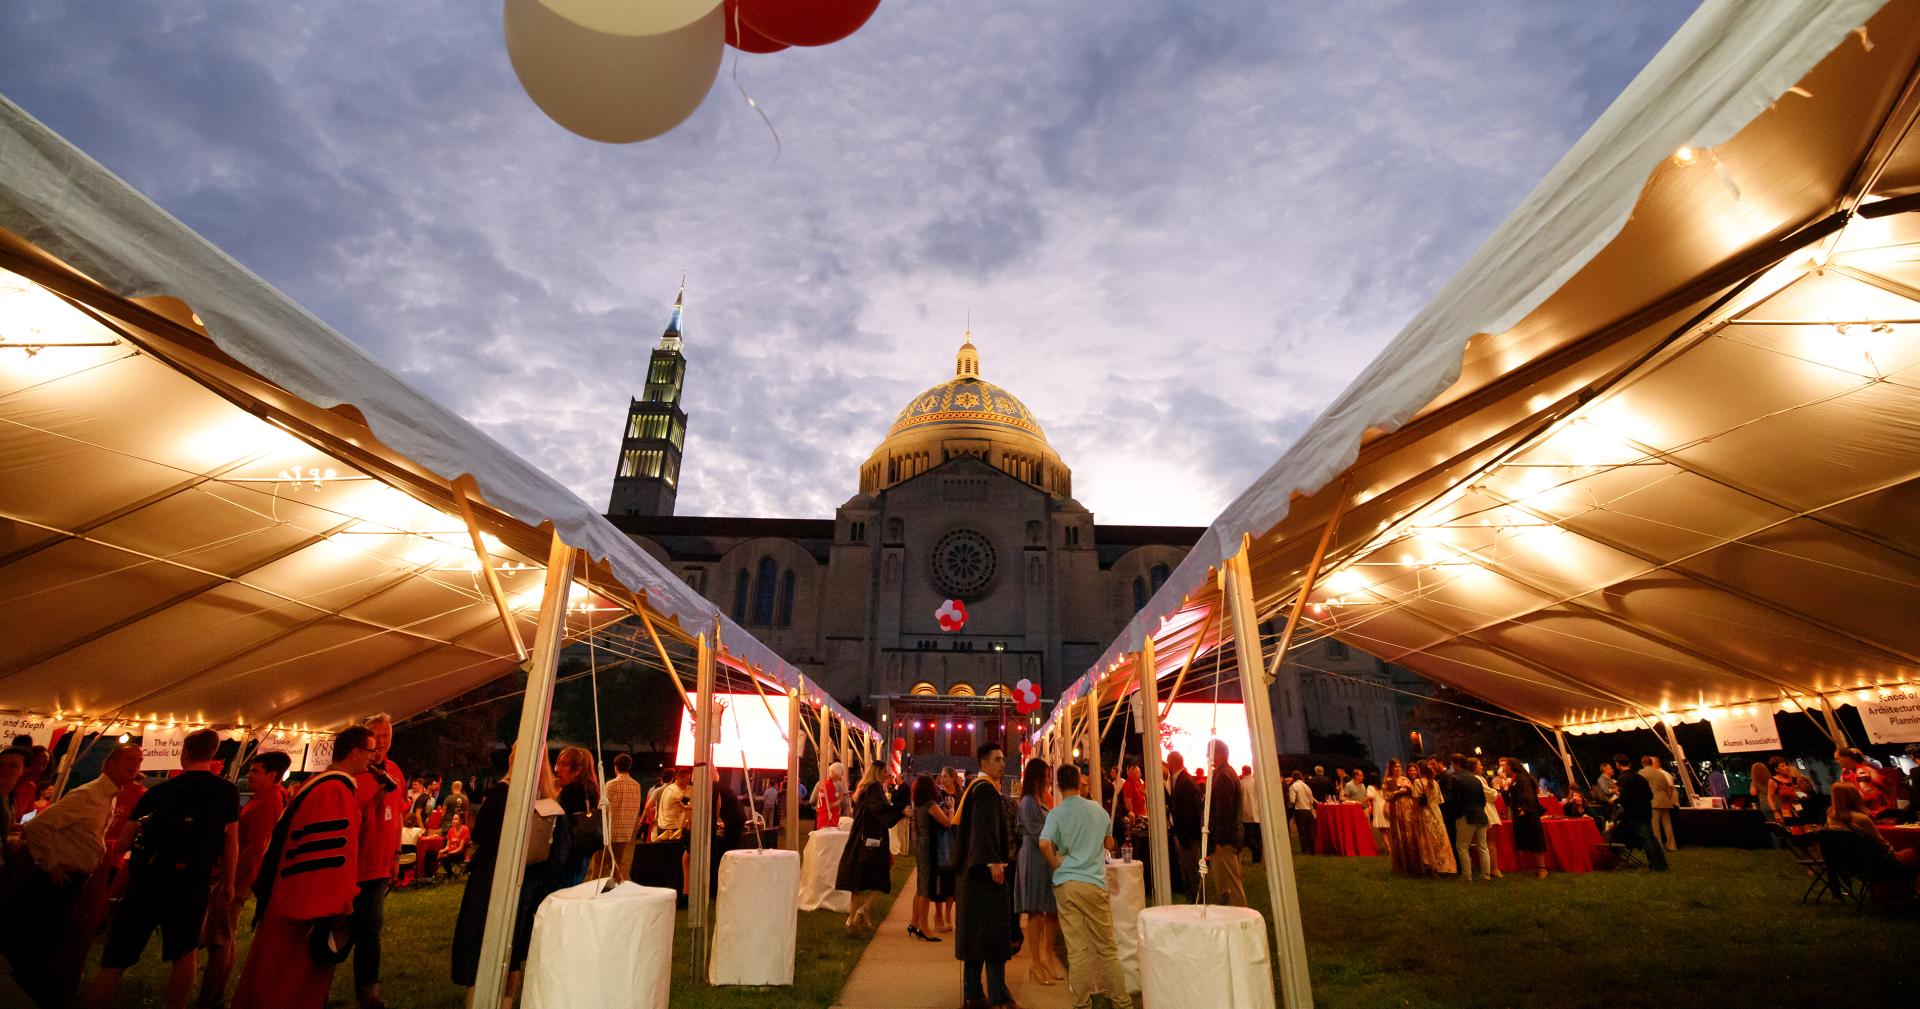 Basilica during Cardinal Fest 2021